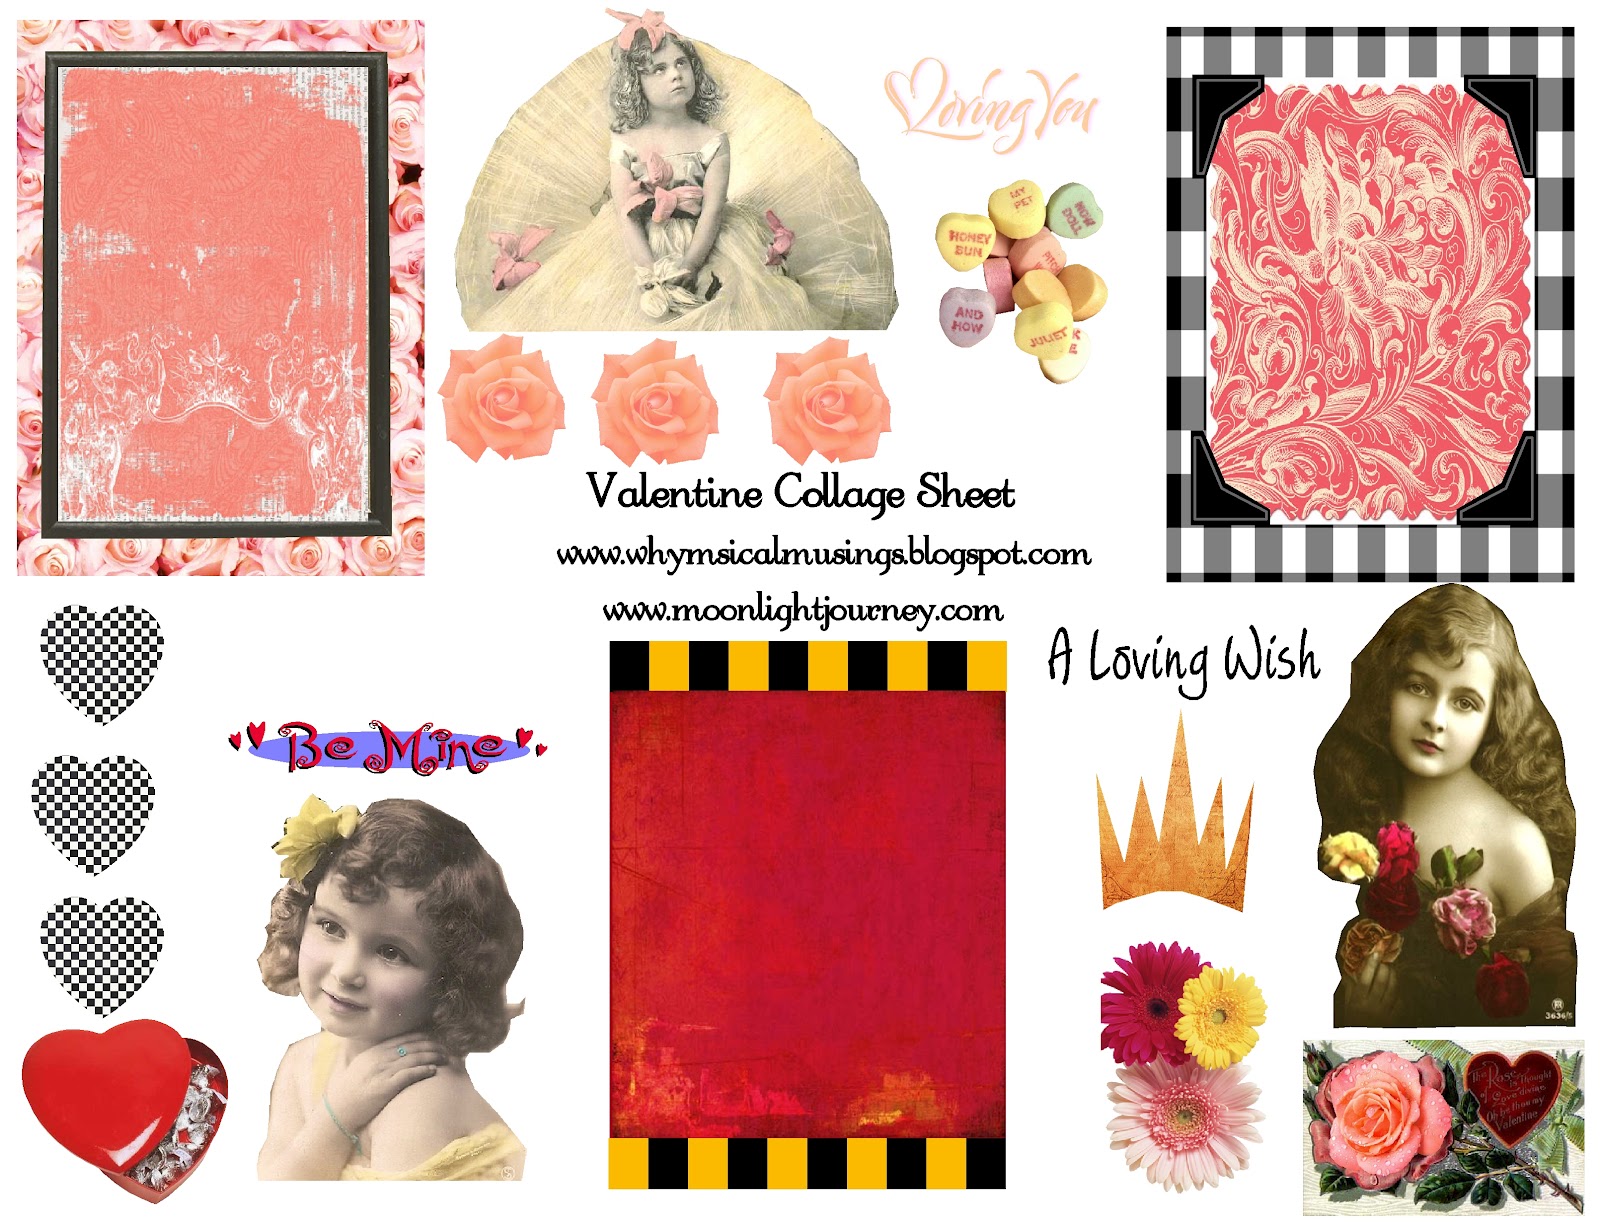 http://1.bp.blogspot.com/-dtF1cY_PtK0/T2ZCeg5gf8I/AAAAAAAABUo/6GsthQ8y2I0/s1600/Valentine+Collage+Sheet.jpg